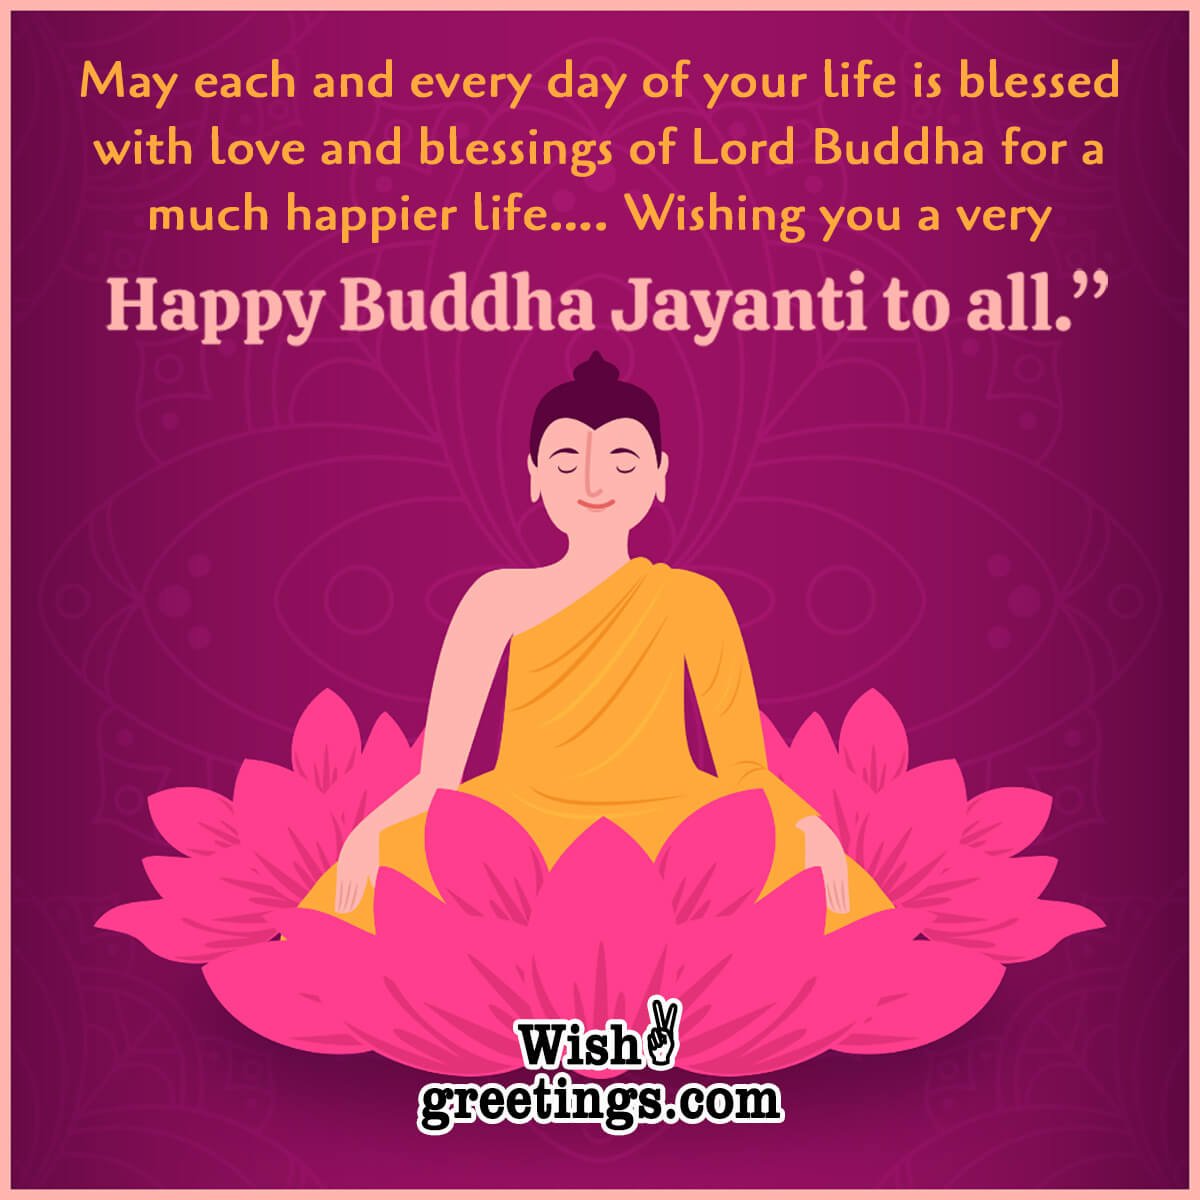 Happy Buddha Jayanti Wishes